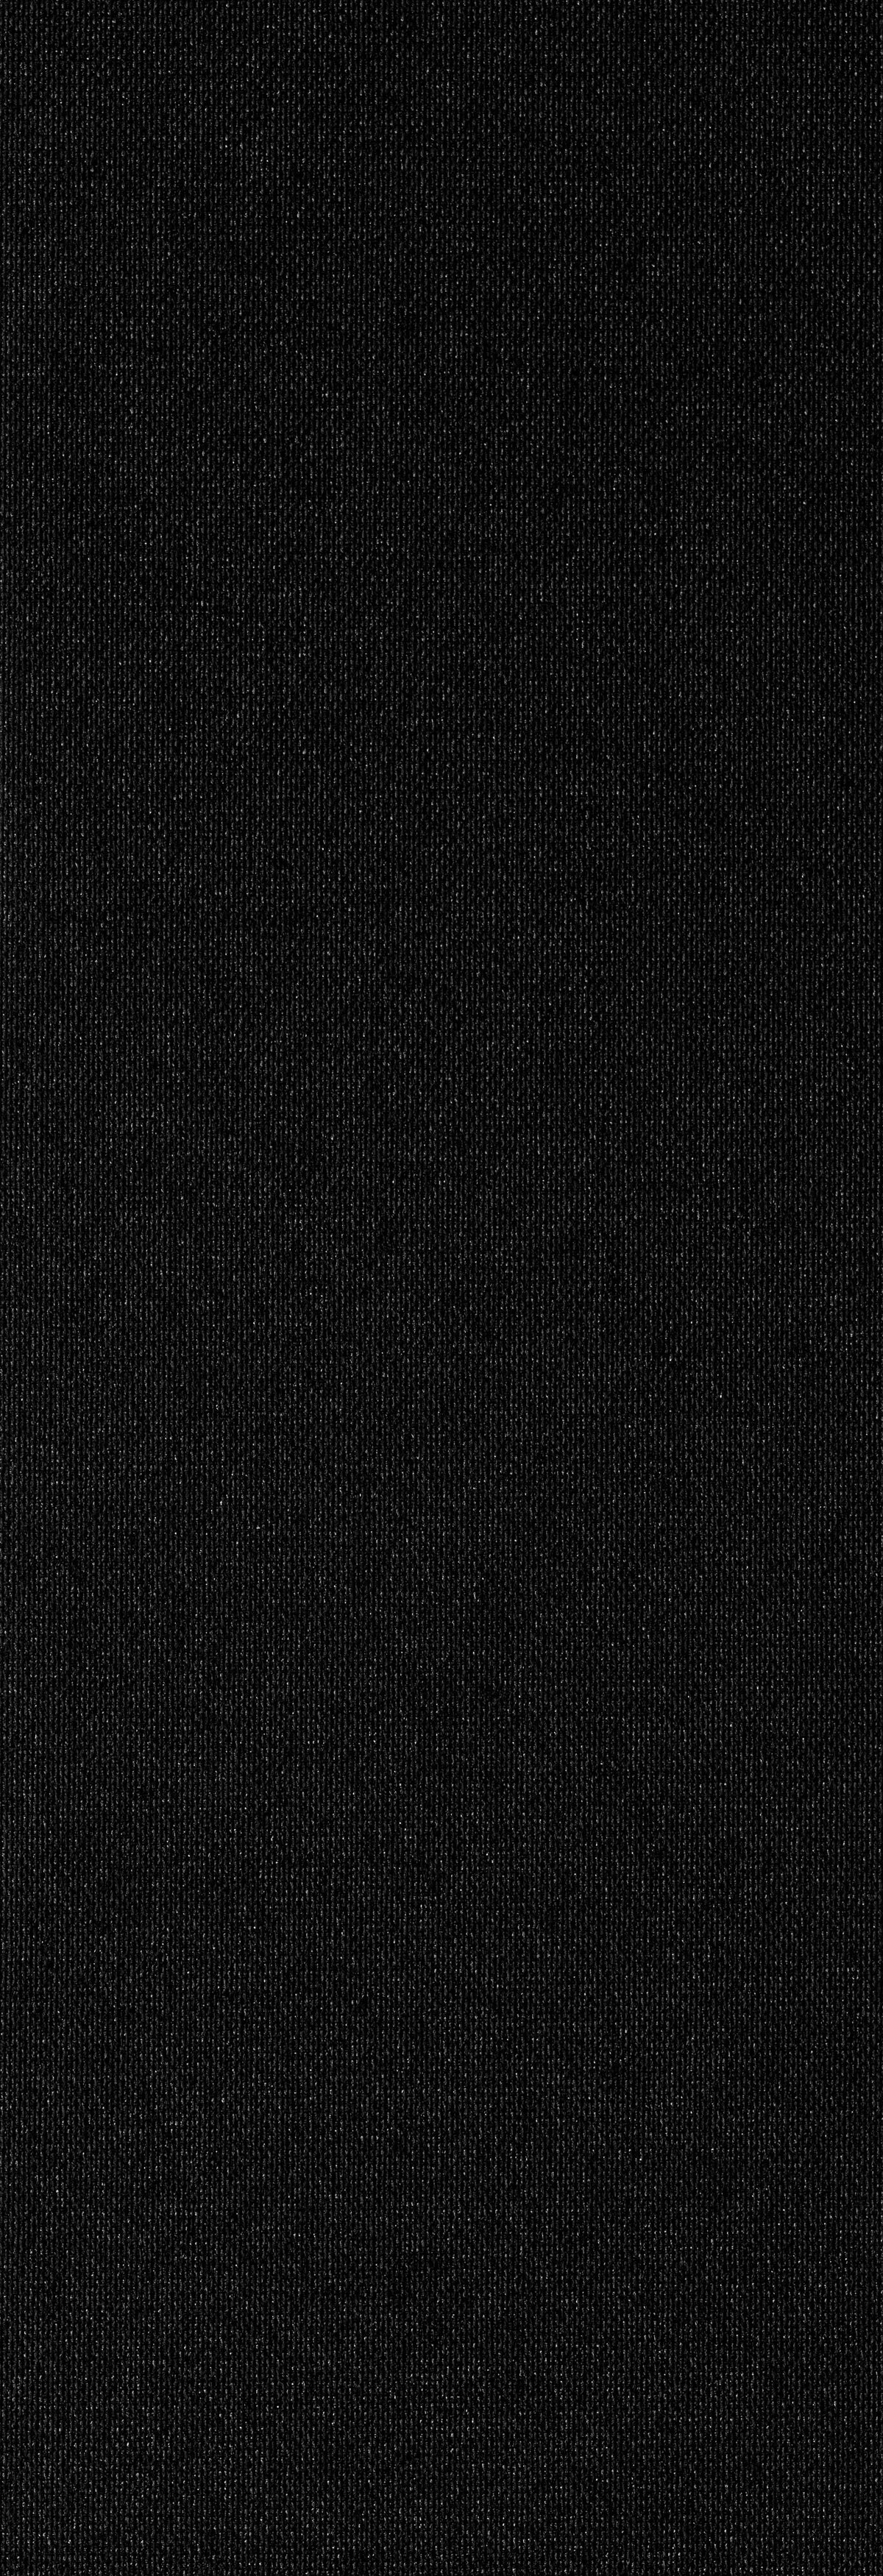 Cairo Blackout Black Vertical Replacement Blind Slat